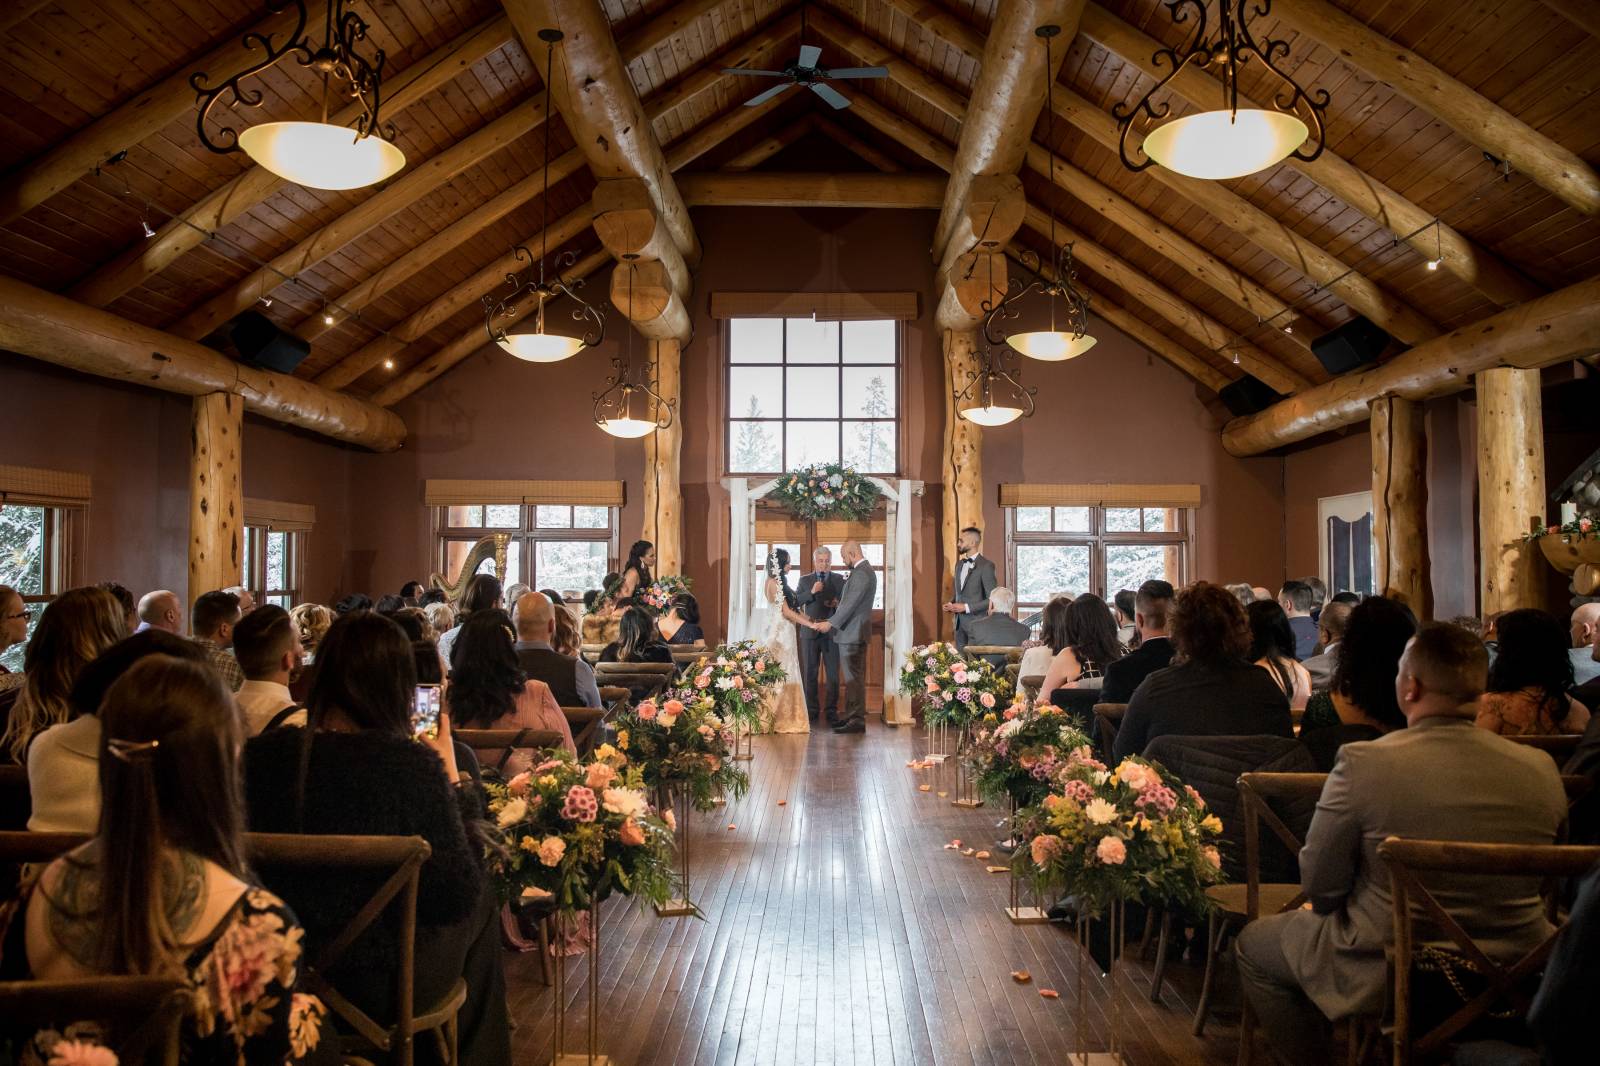 Buffalo Mountain Lodge Indoor Ceremony, Rustic wedding venue, Banff Ceremony Venue, Banff indoor cer